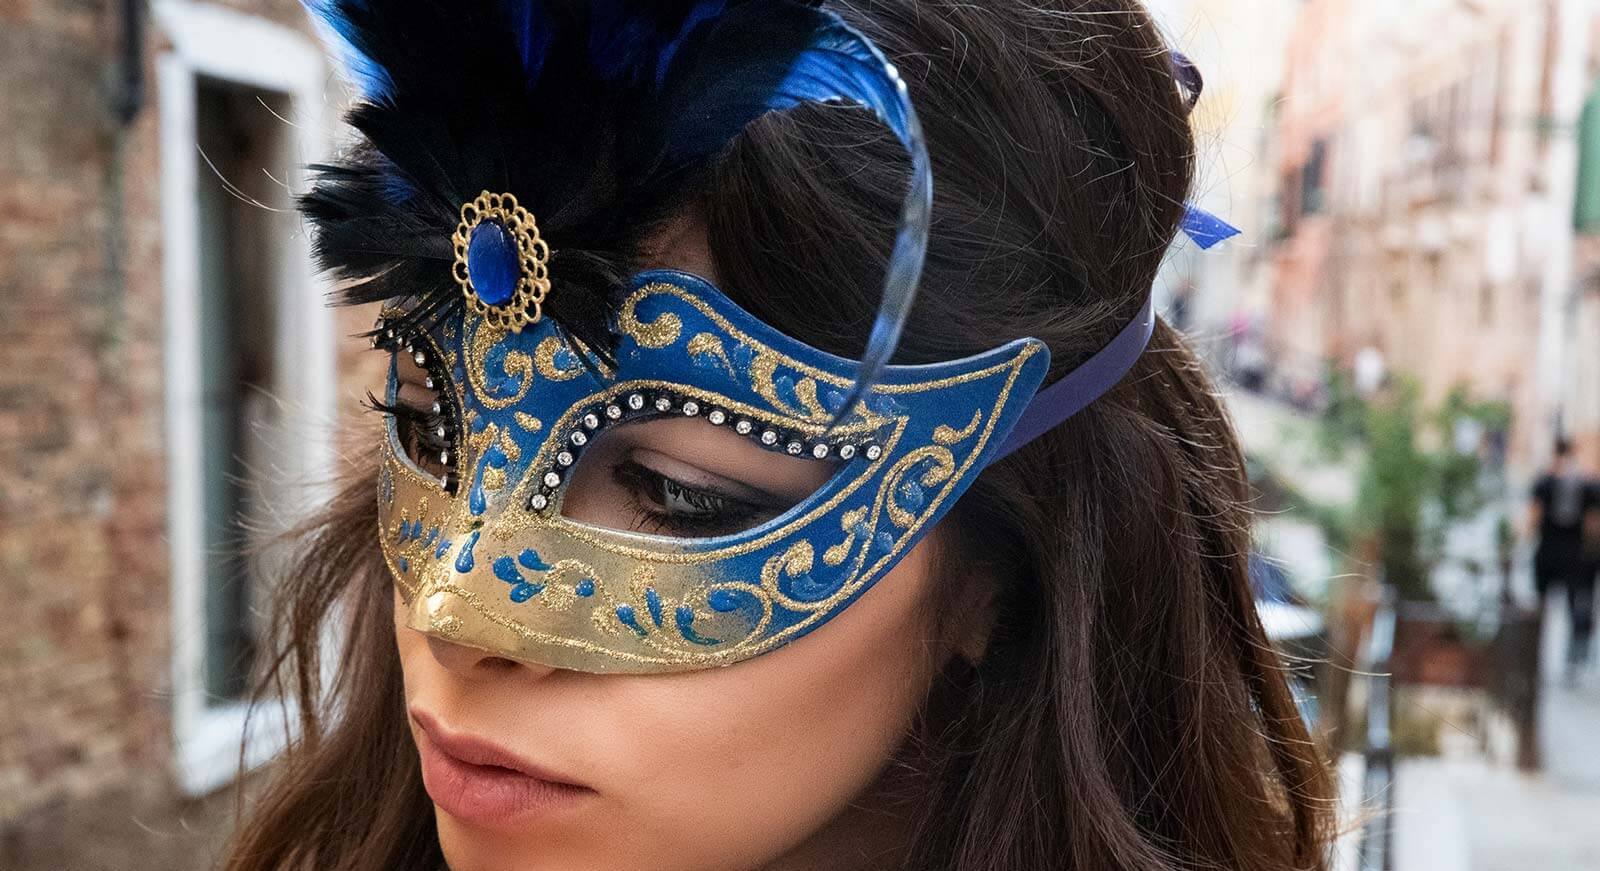 https://www.veneziamaschere.com/wp-content/uploads/2021/12/venetian-masks-with-feathers.jpg